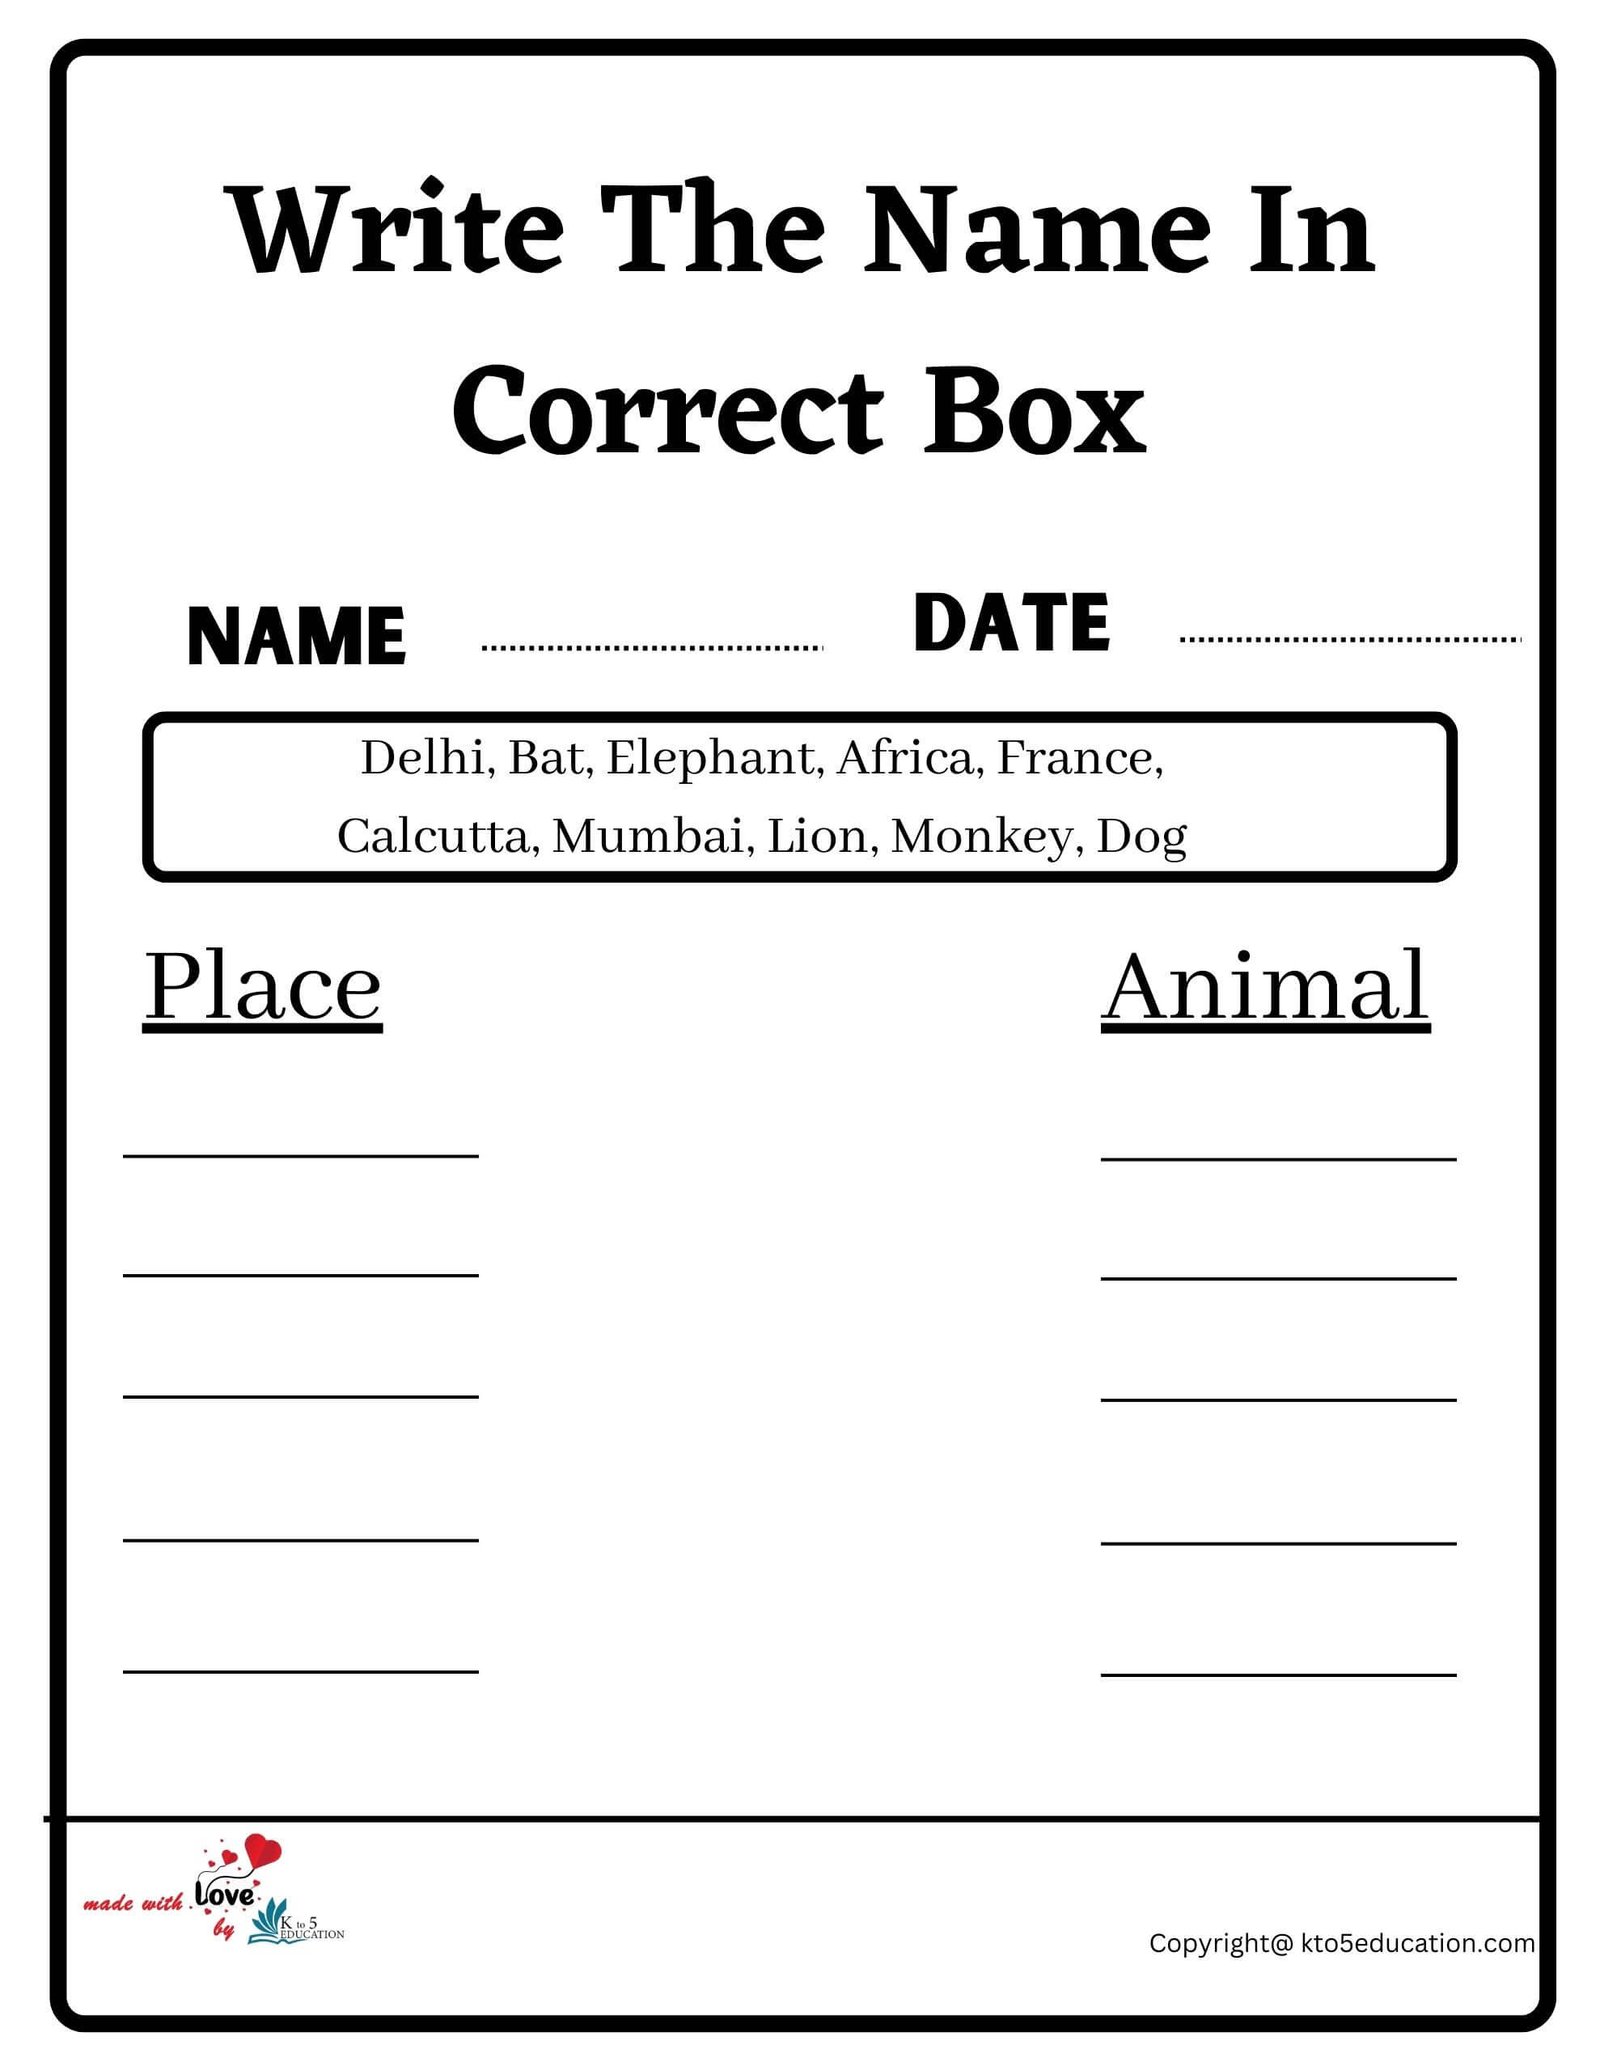 Write The Name In Correct Box Worksheet 2